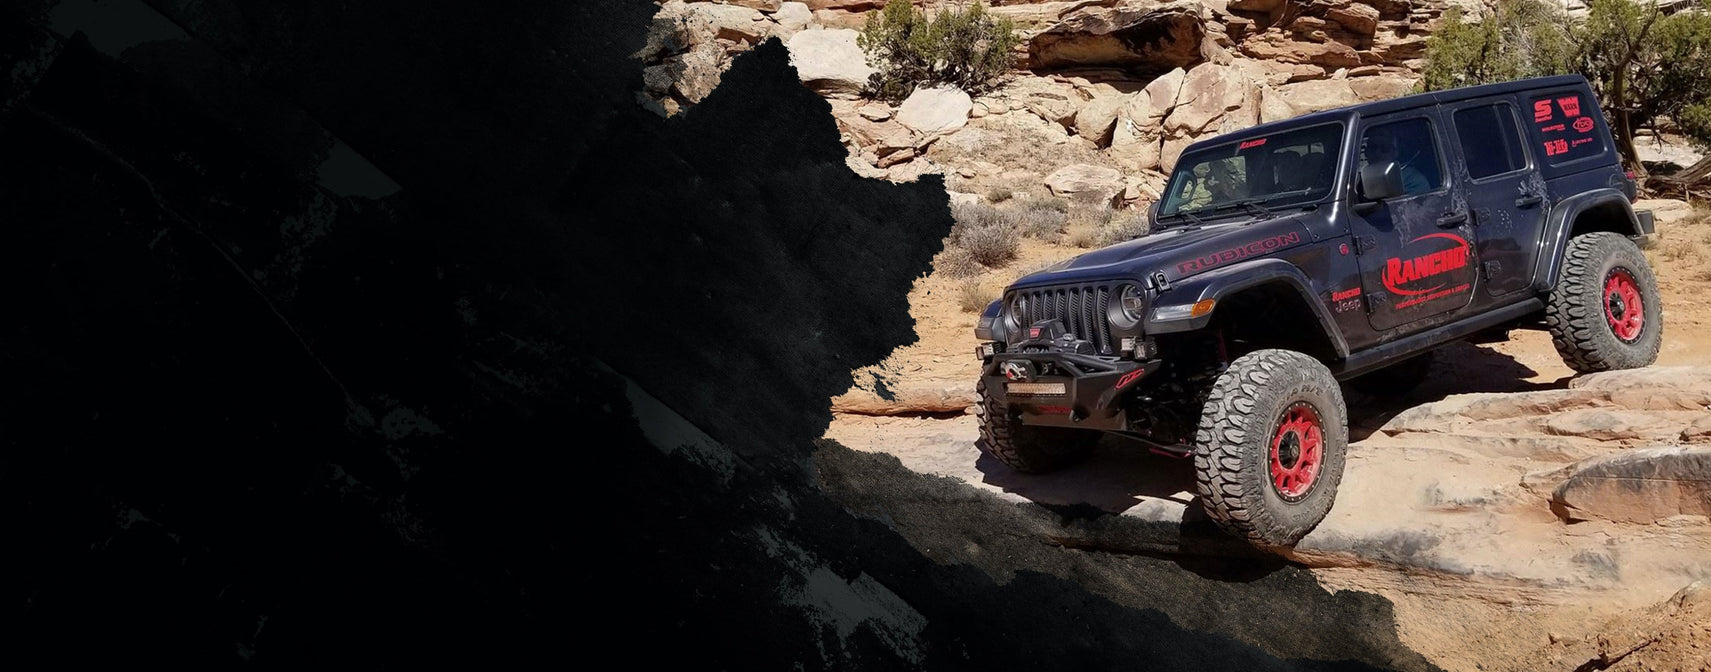 Rancho jeep driving on rocks